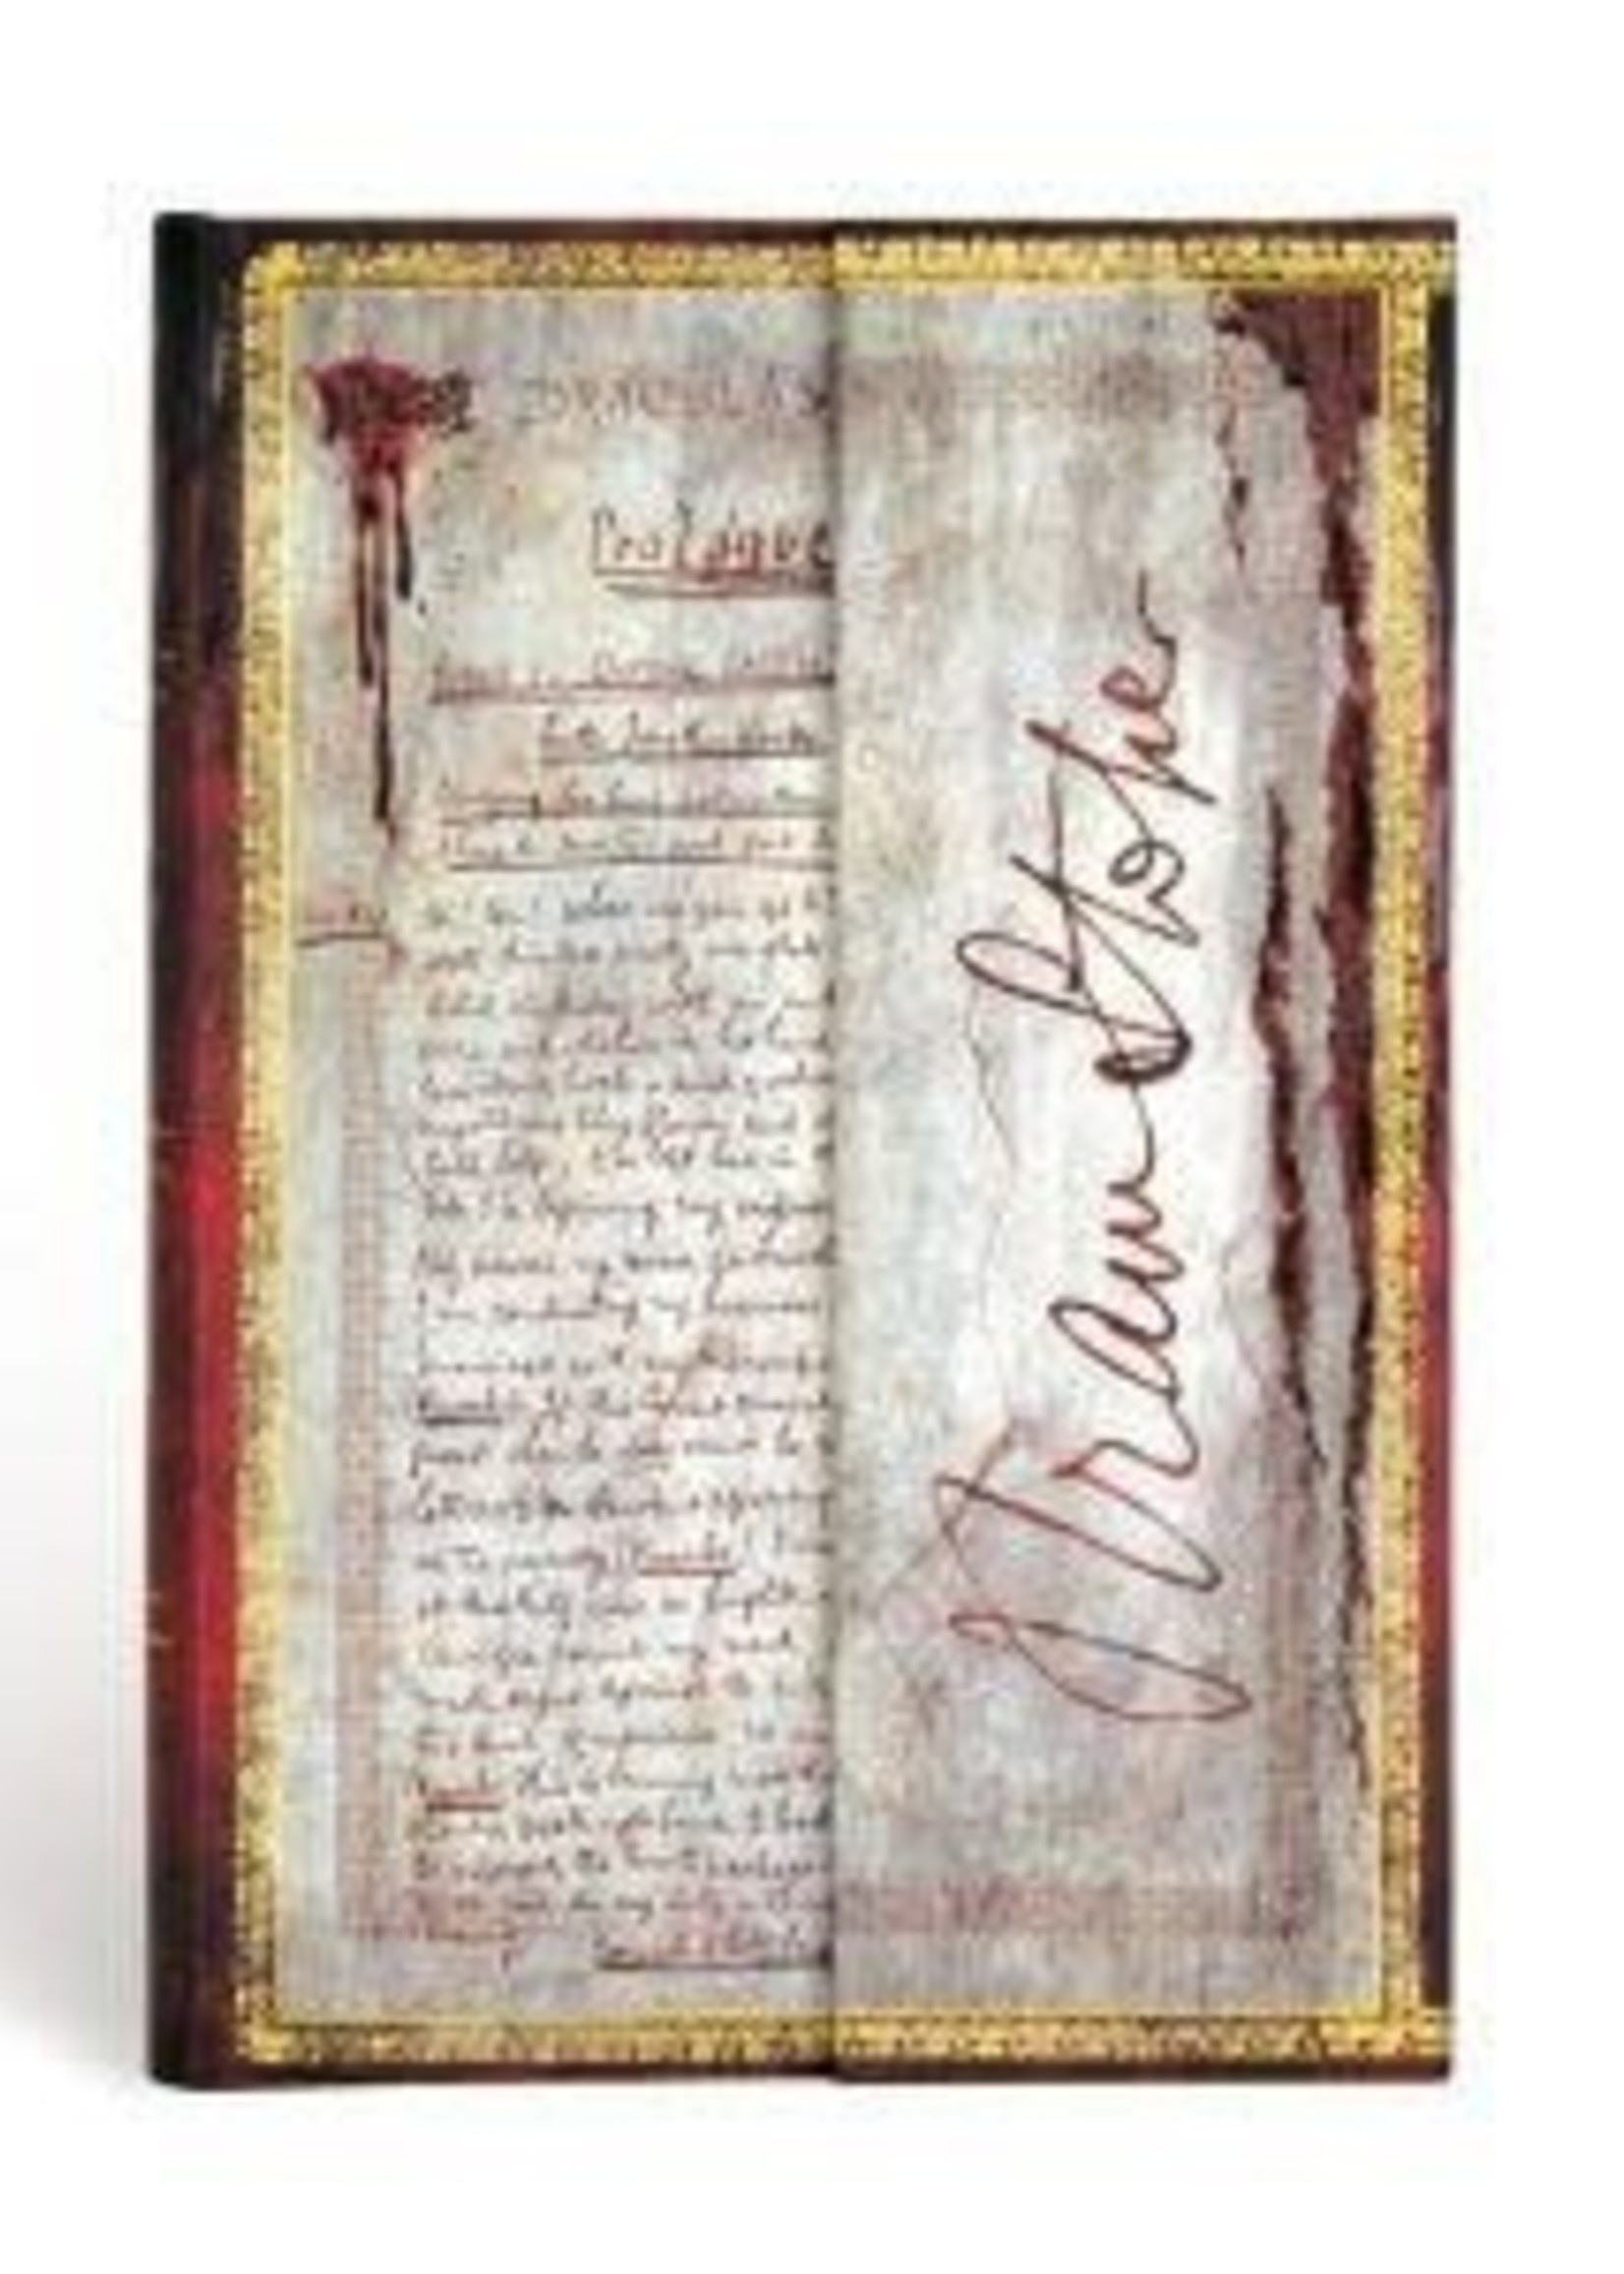 Bram Stoker, Dracula: Mini Lined Journal (Embellished Manuscripts Collection)